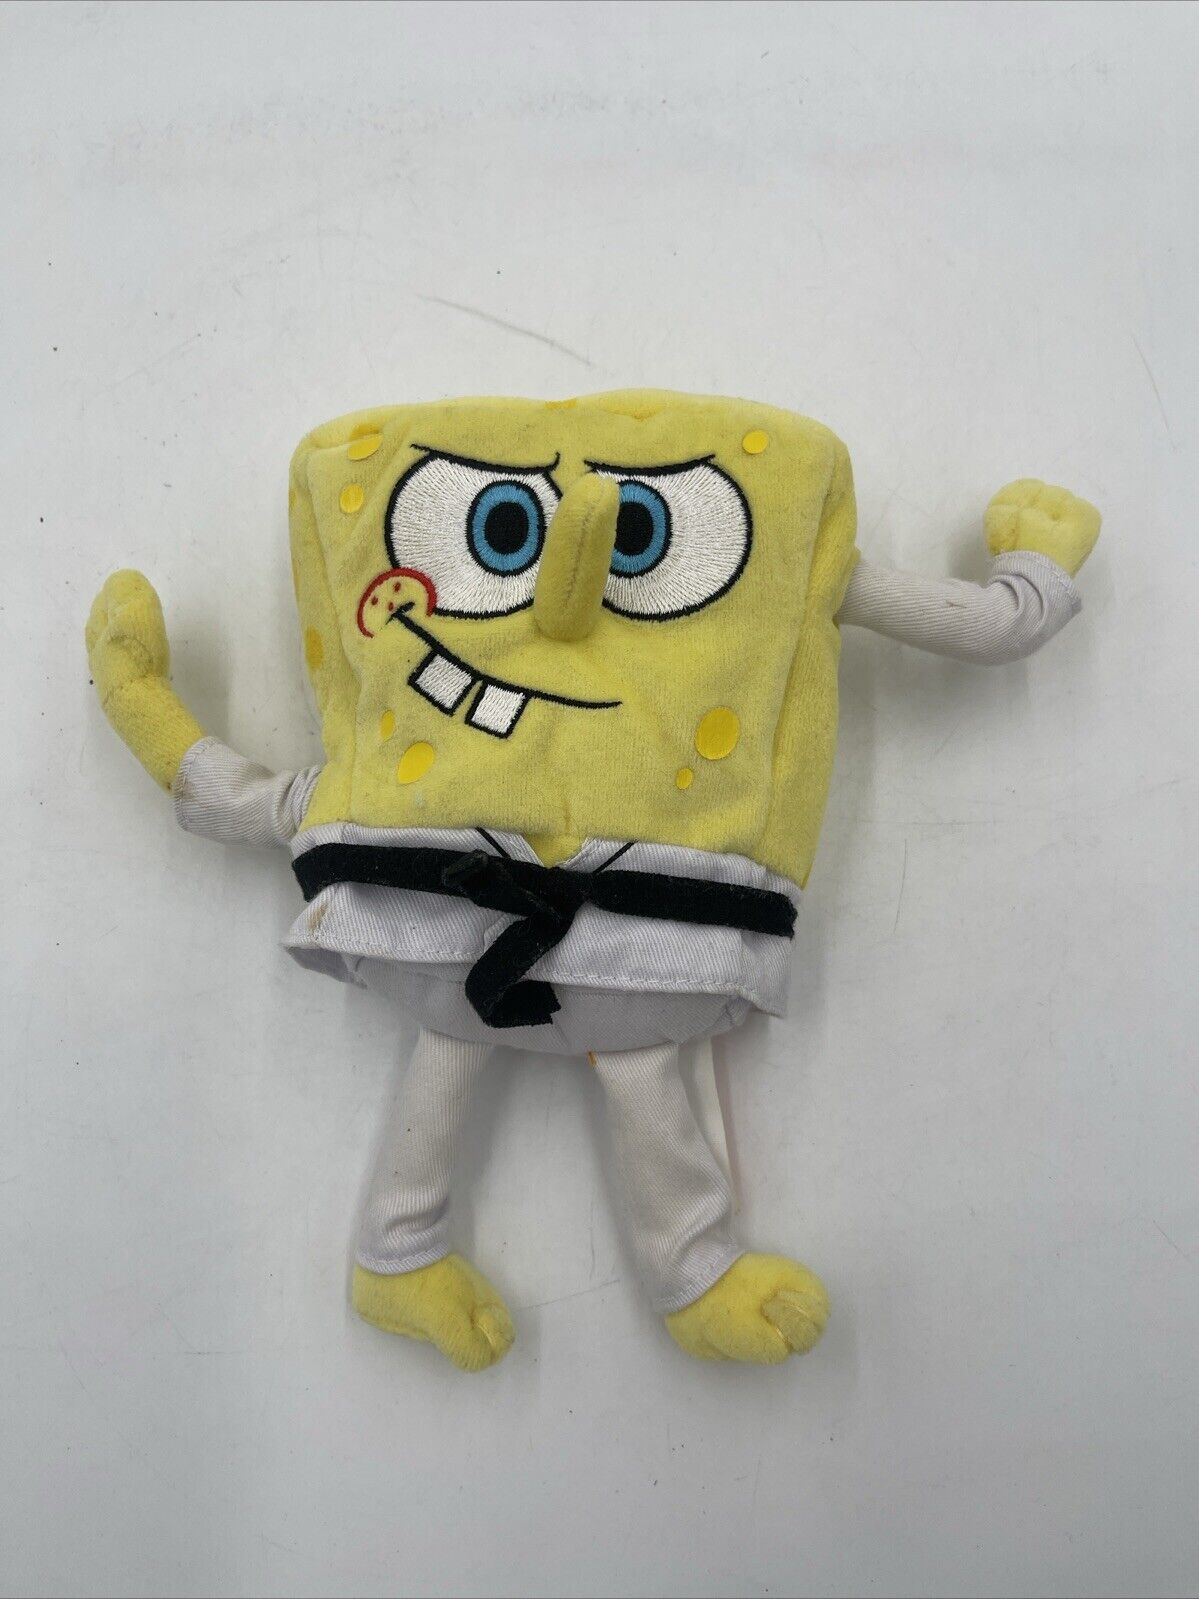 Nickelodeon 2008 SpongeBob SquarePants Karate Gi  Plush Stuffed Toy Animation